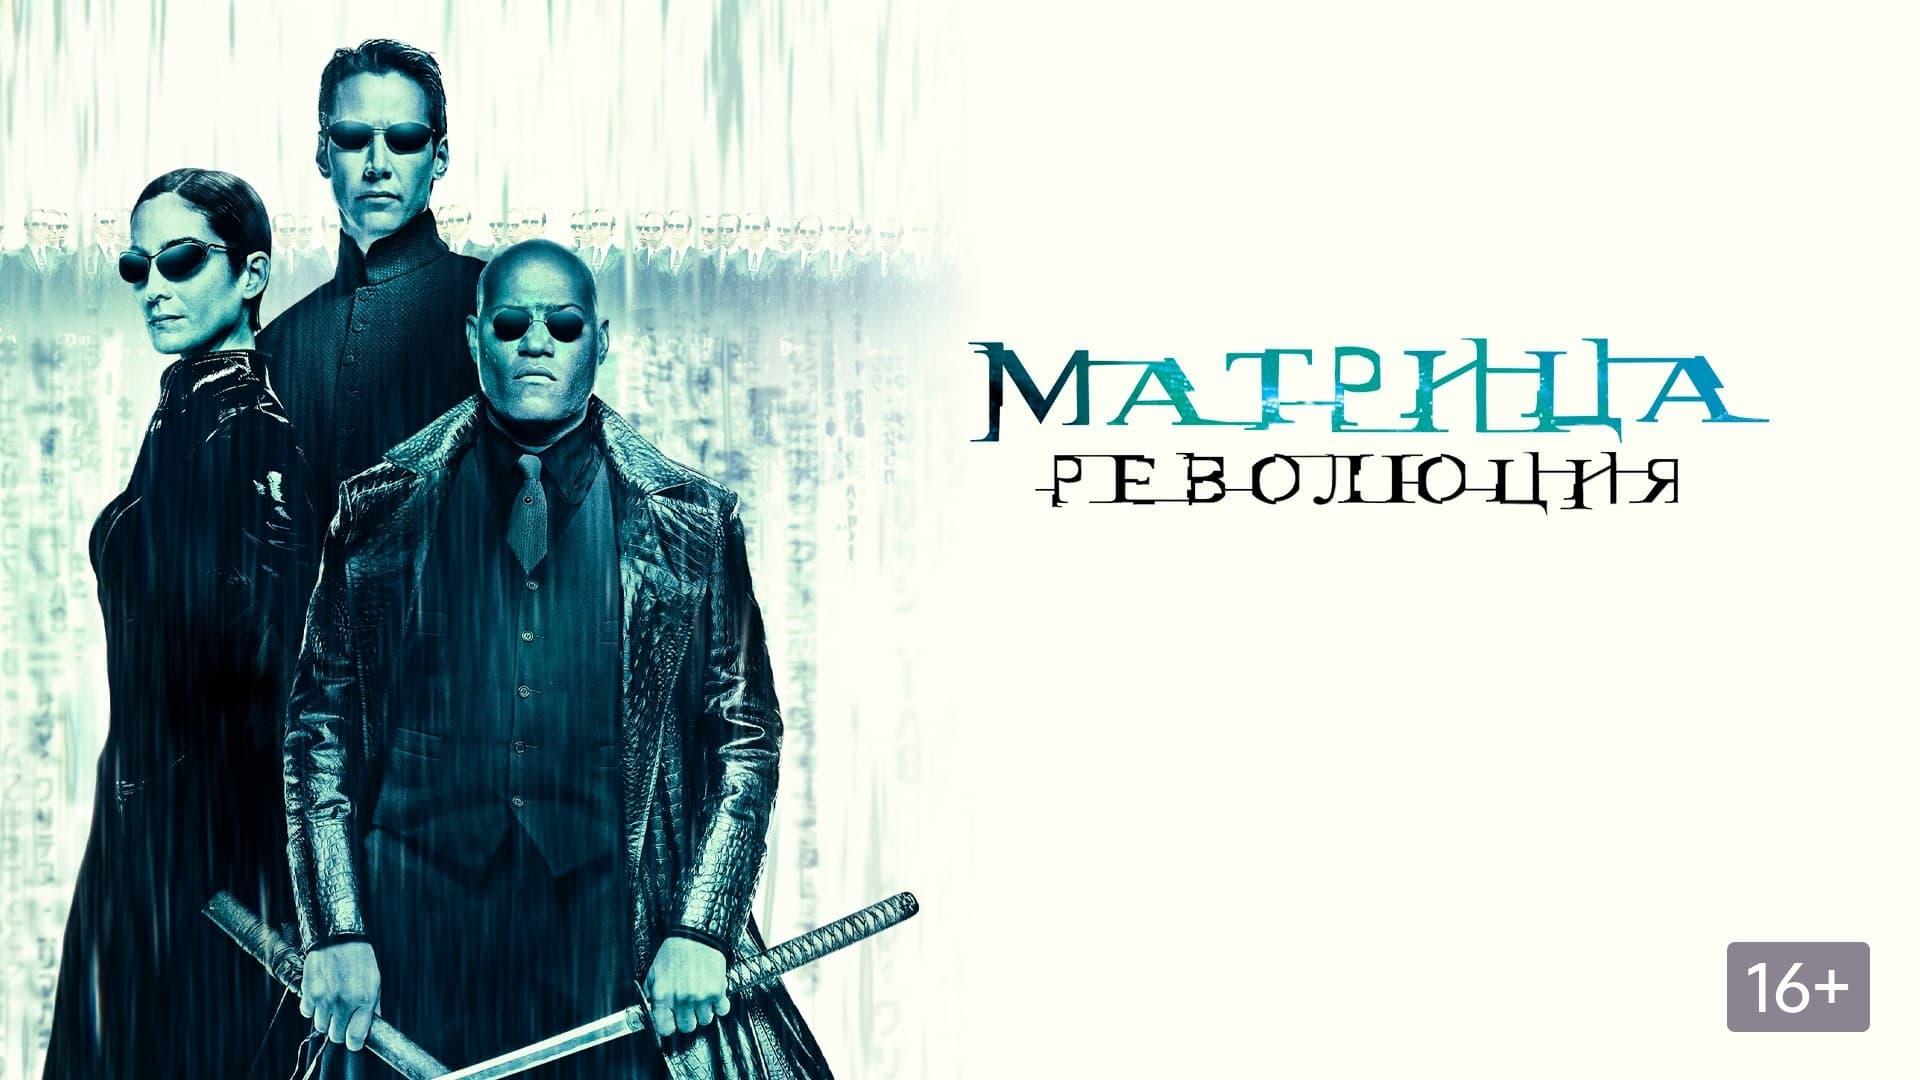 Image du film Matrix Revolutions mmi1zql8cz3yn6qlxhbj5jfzw4bjpg